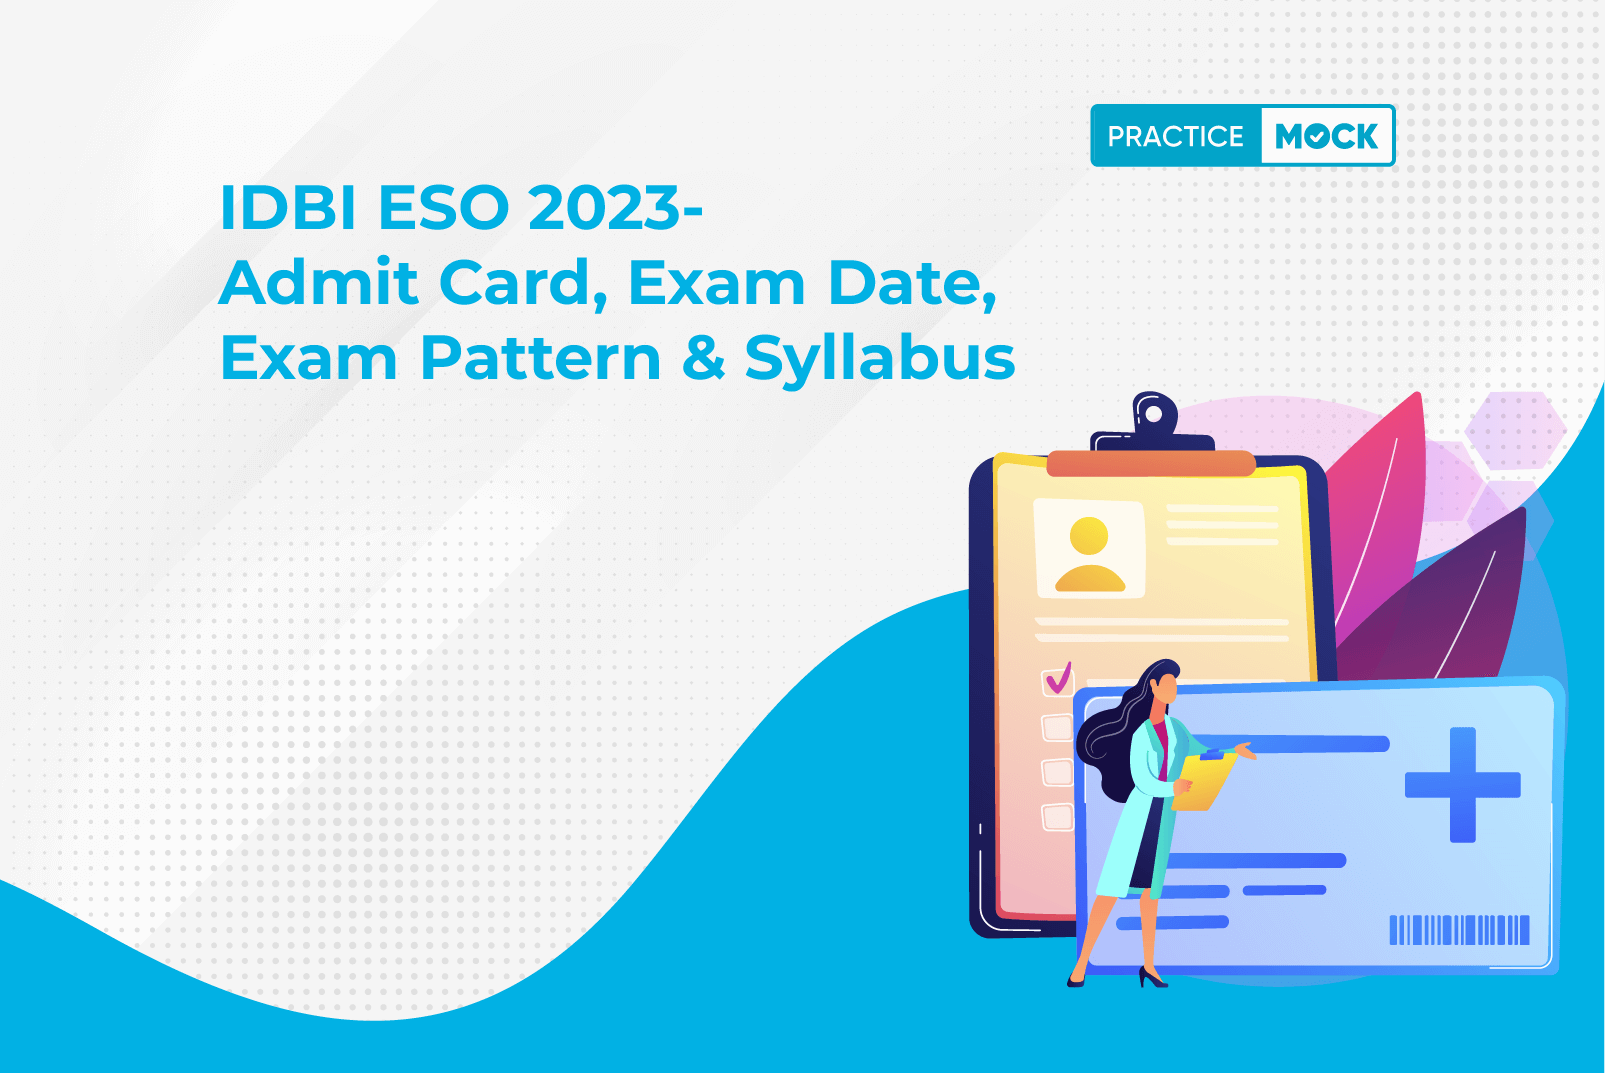 IDBI ESO 2023- Admit Card, Exam Date, Exam Pattern & Syllabus